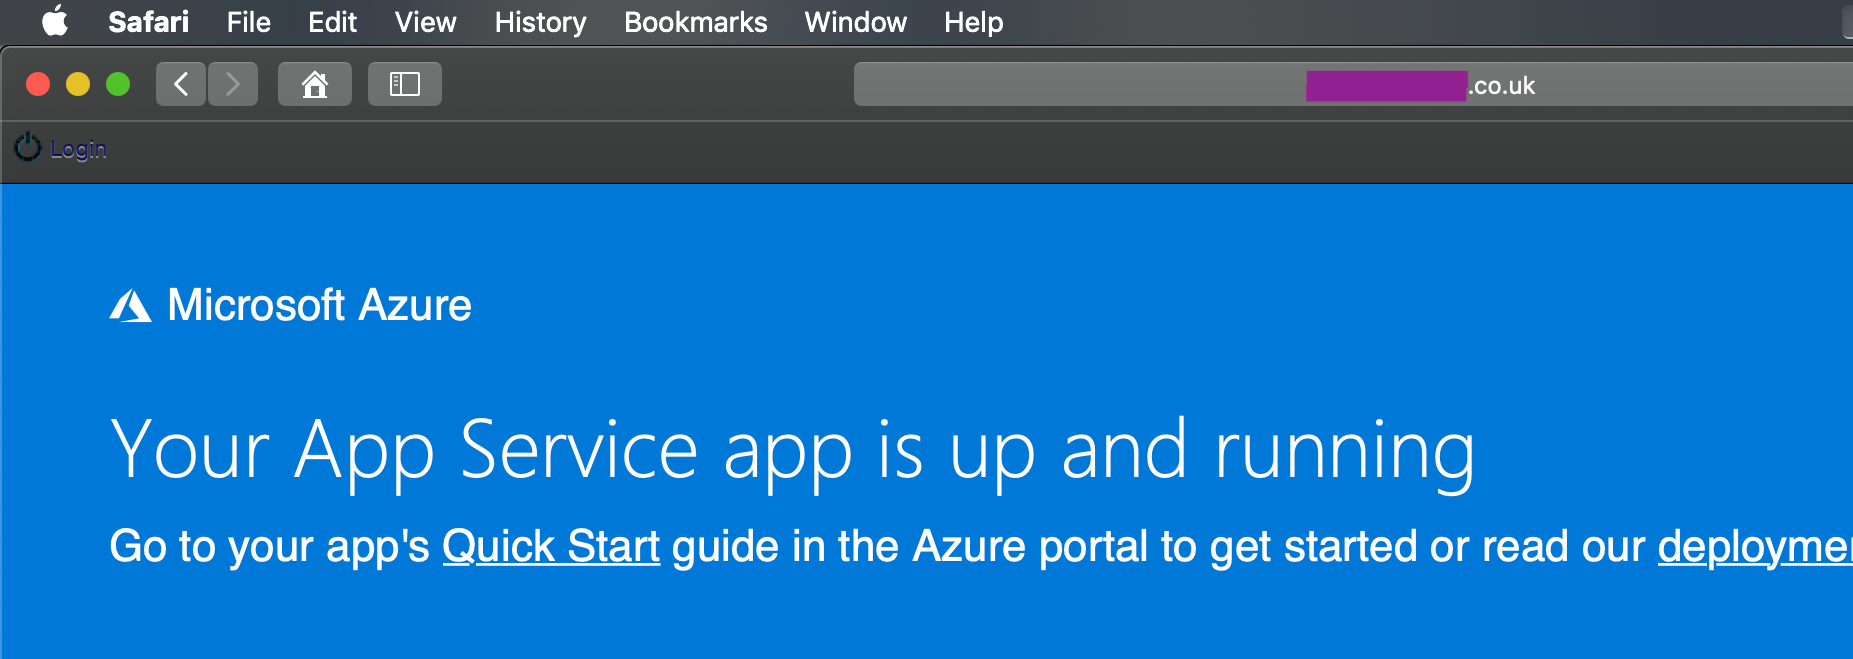 Azure App Service - Deployed